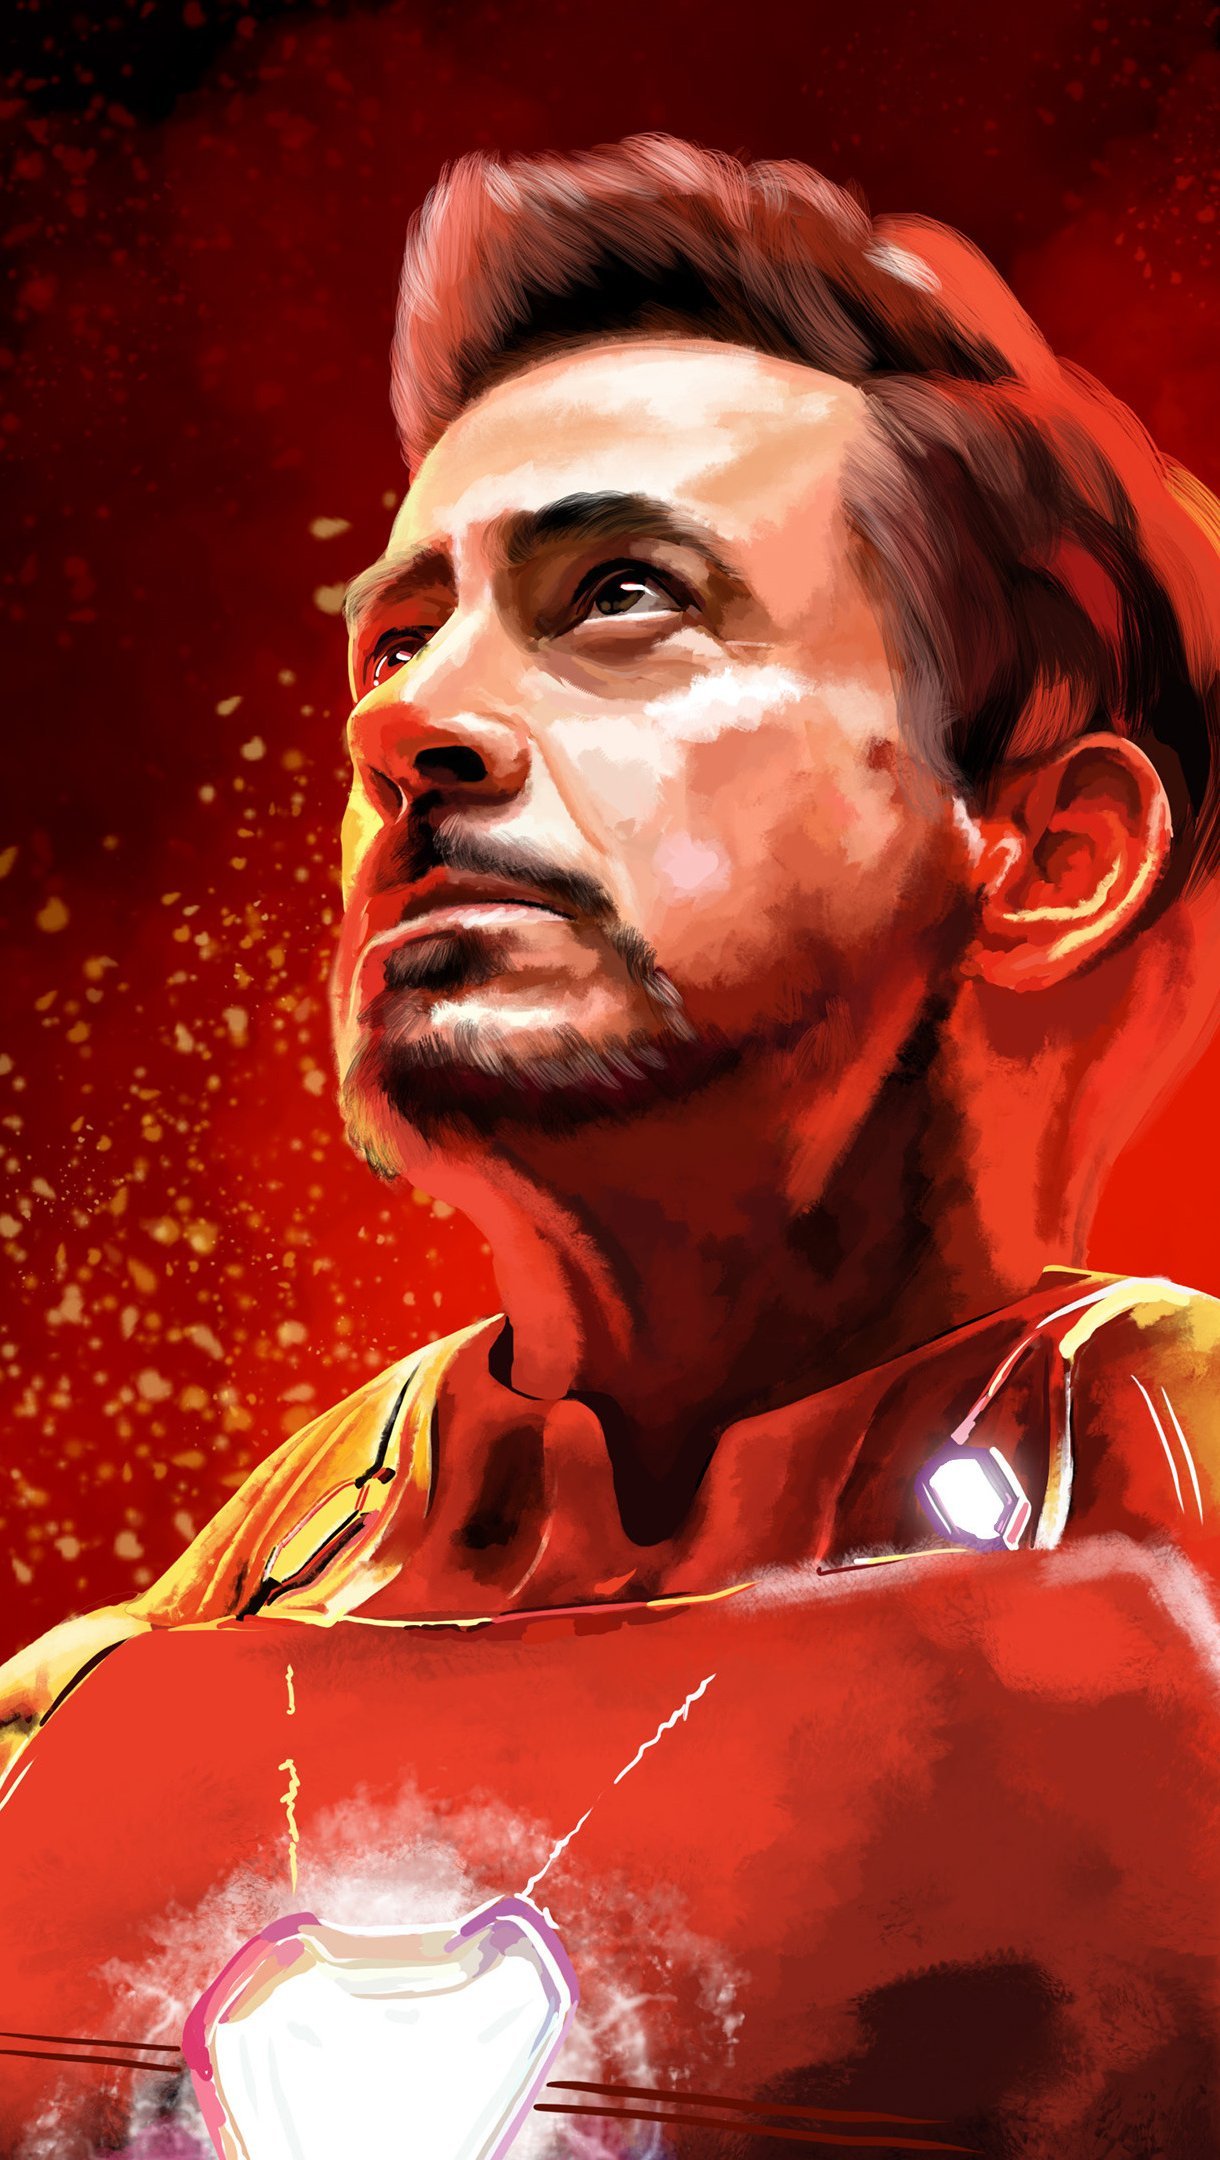 Fondos de pantalla Robert Downey Jr como Iron Man Fanart Vertical